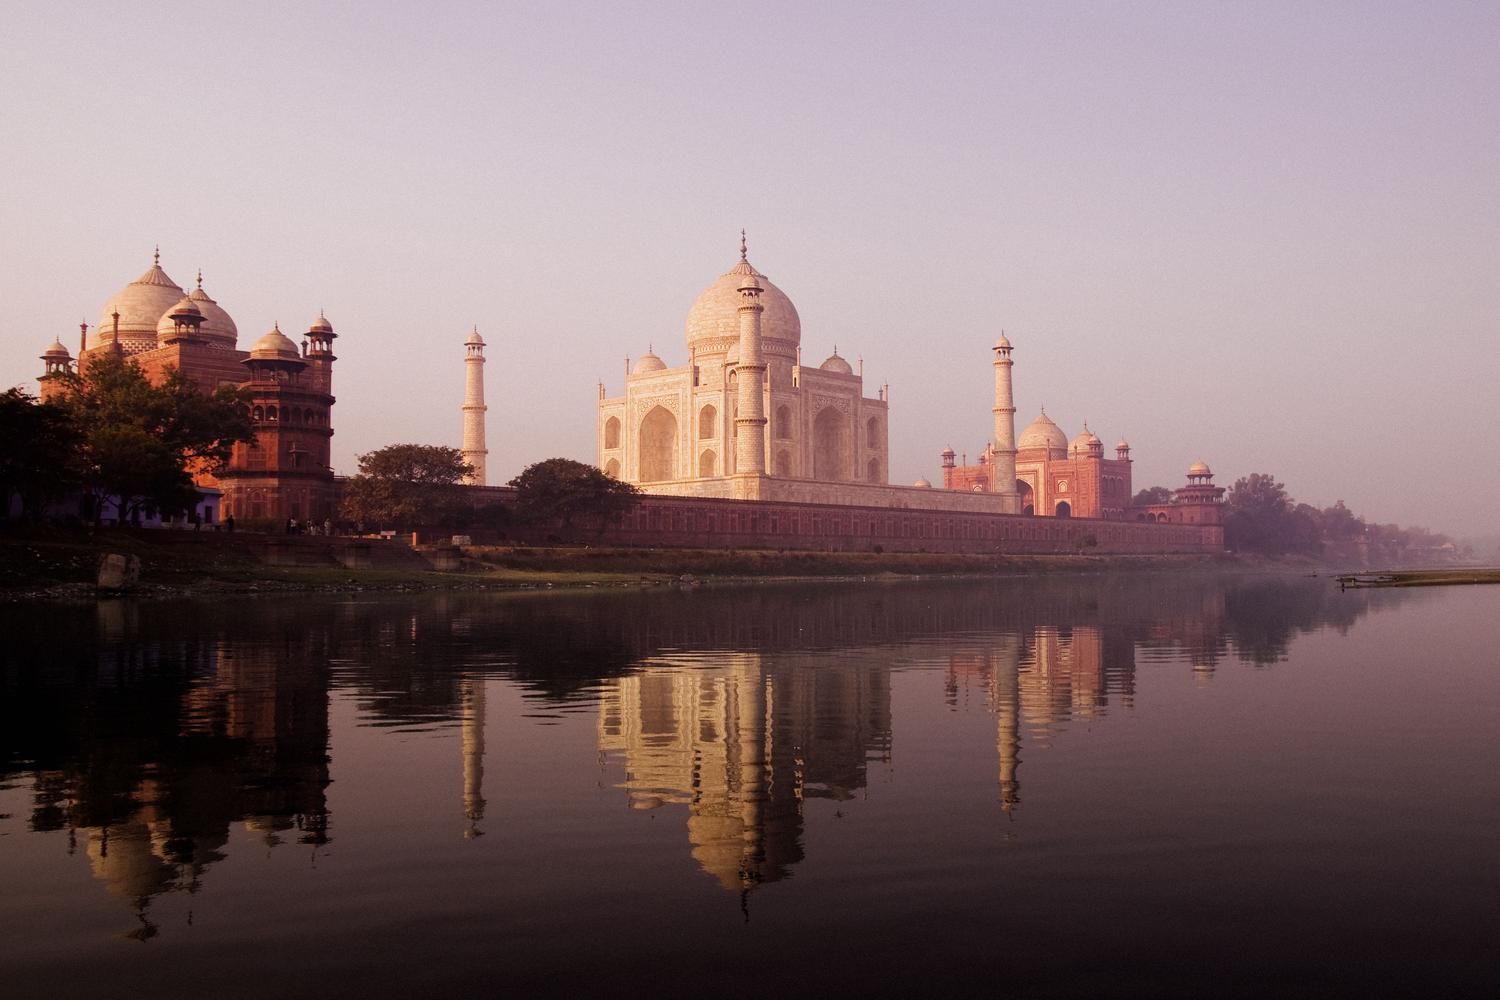 Remote Rajasthan, Tigers and the Taj Mahal